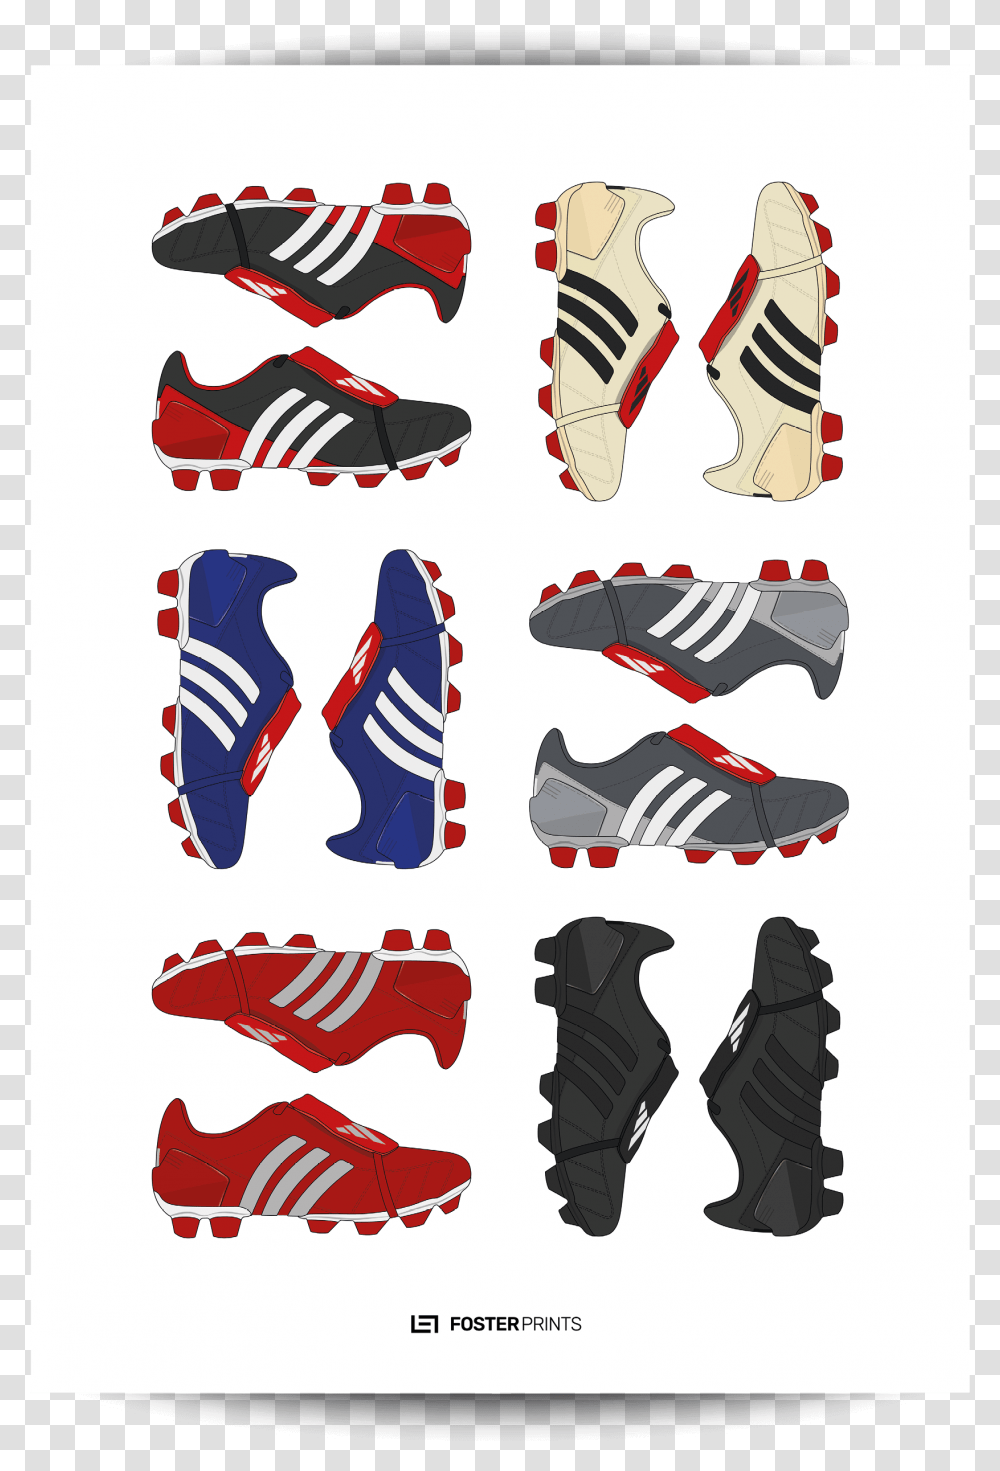 Adidas Predator Mania Collection Beckham Foster Prints, Apparel, Footwear, Shoe Transparent Png